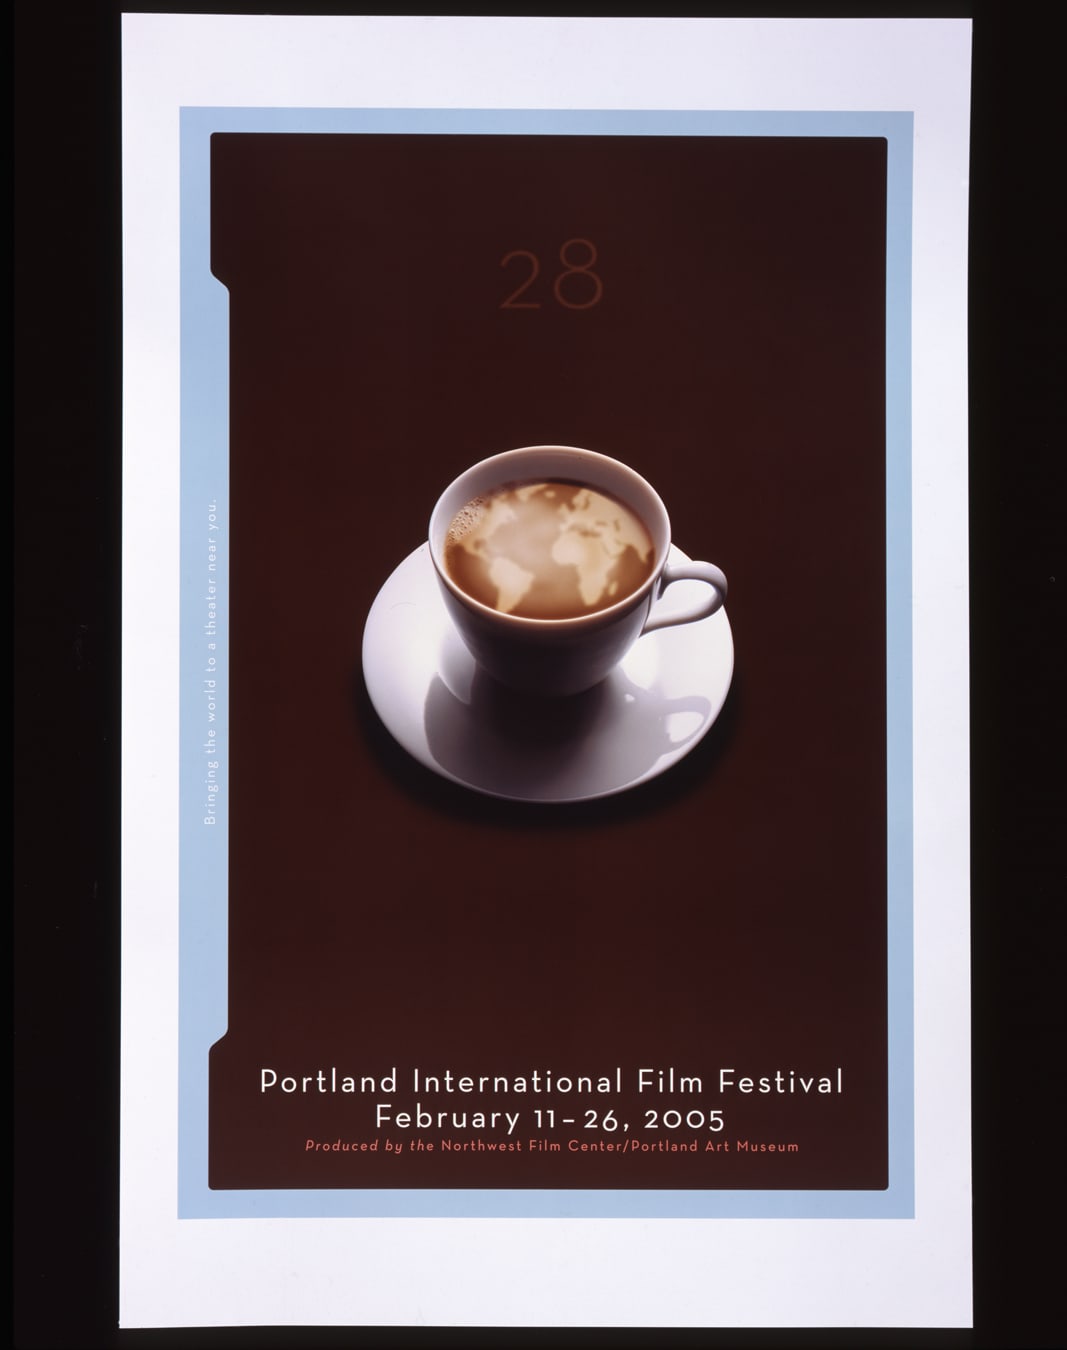 28th Portland International Film Festival Poster design